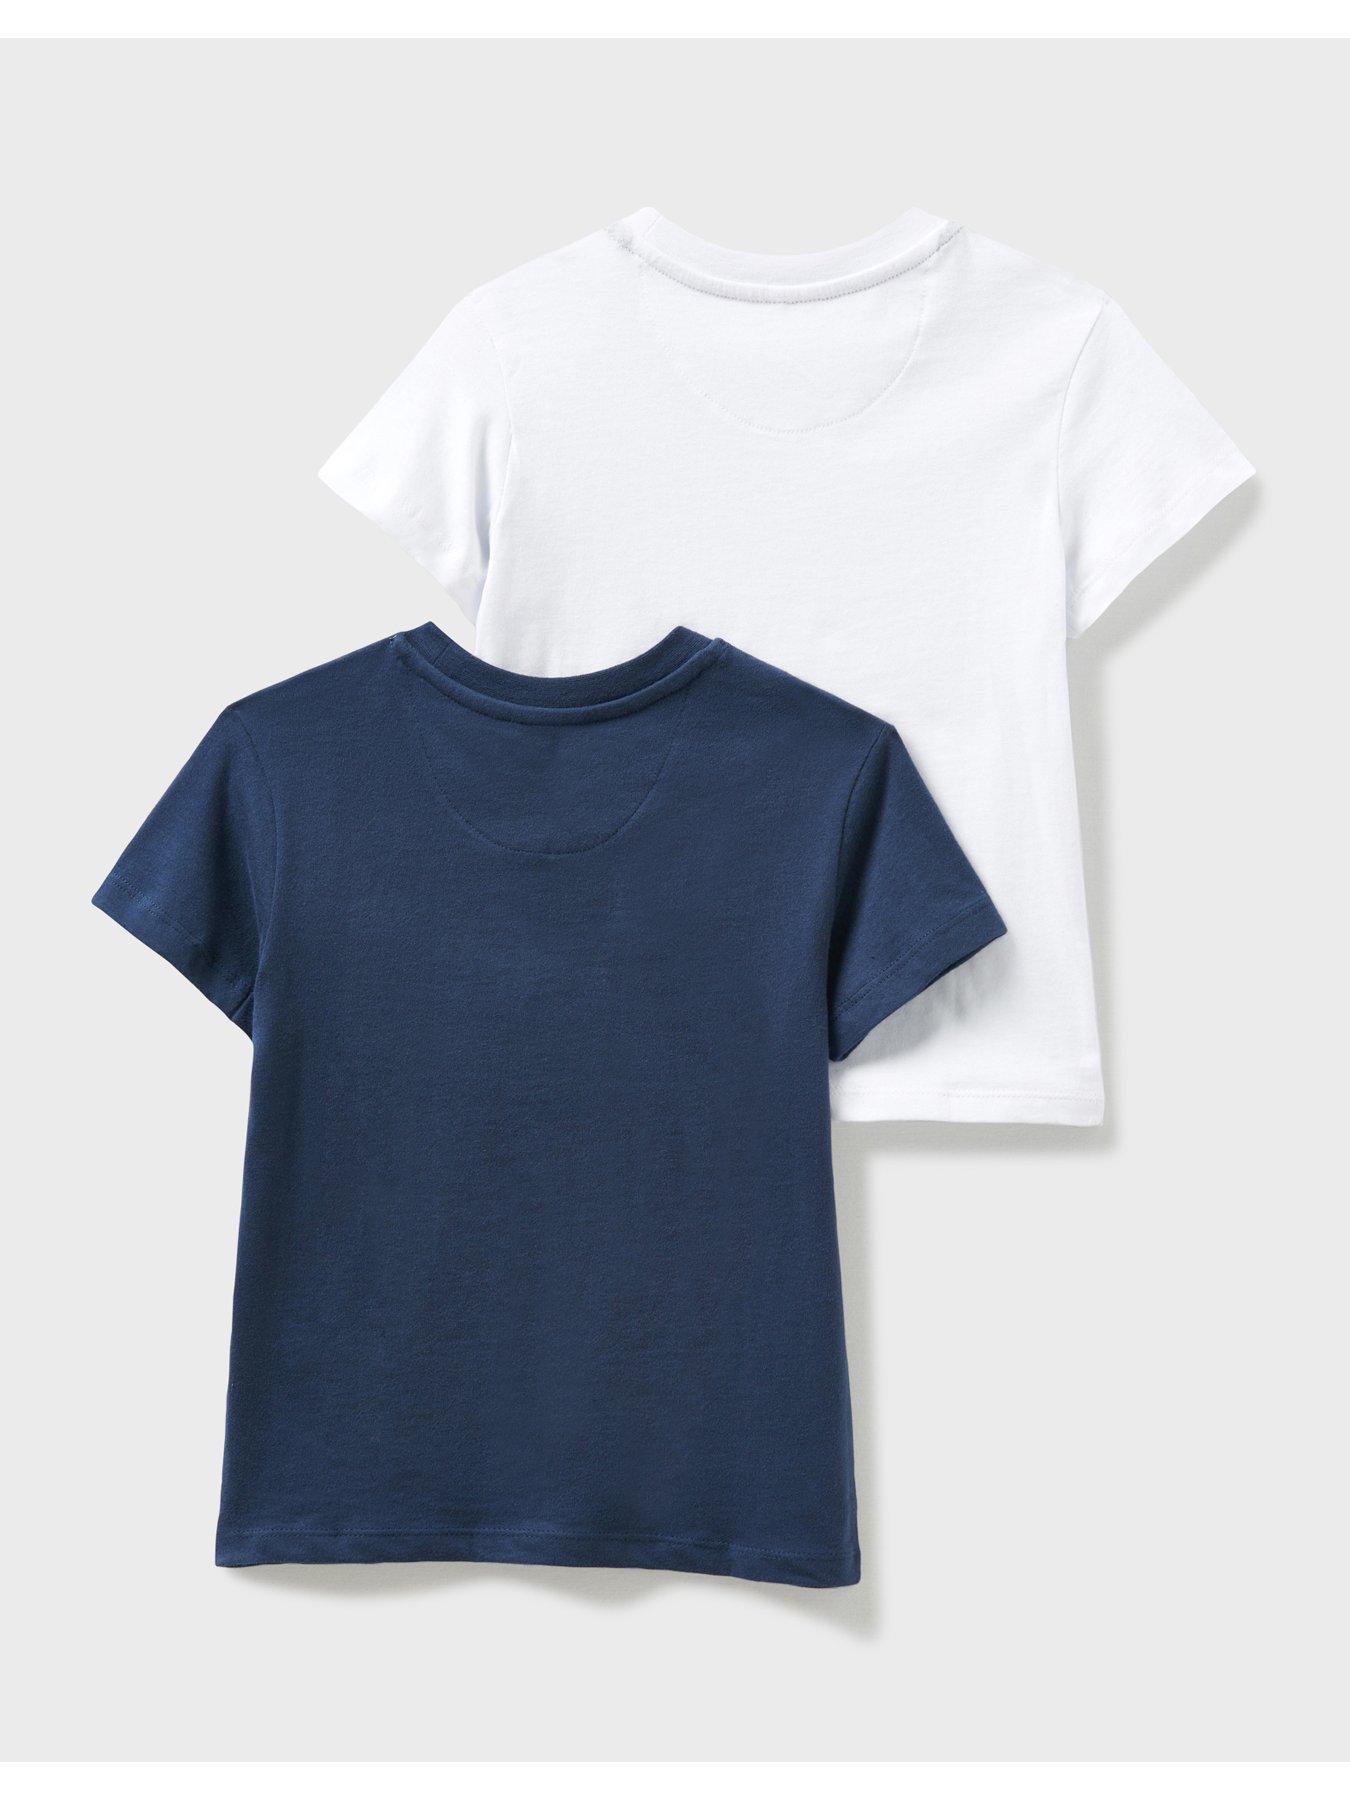 Crew Clothing Kids Unisex 2 Pack Classic Short Sleeve T-shirts